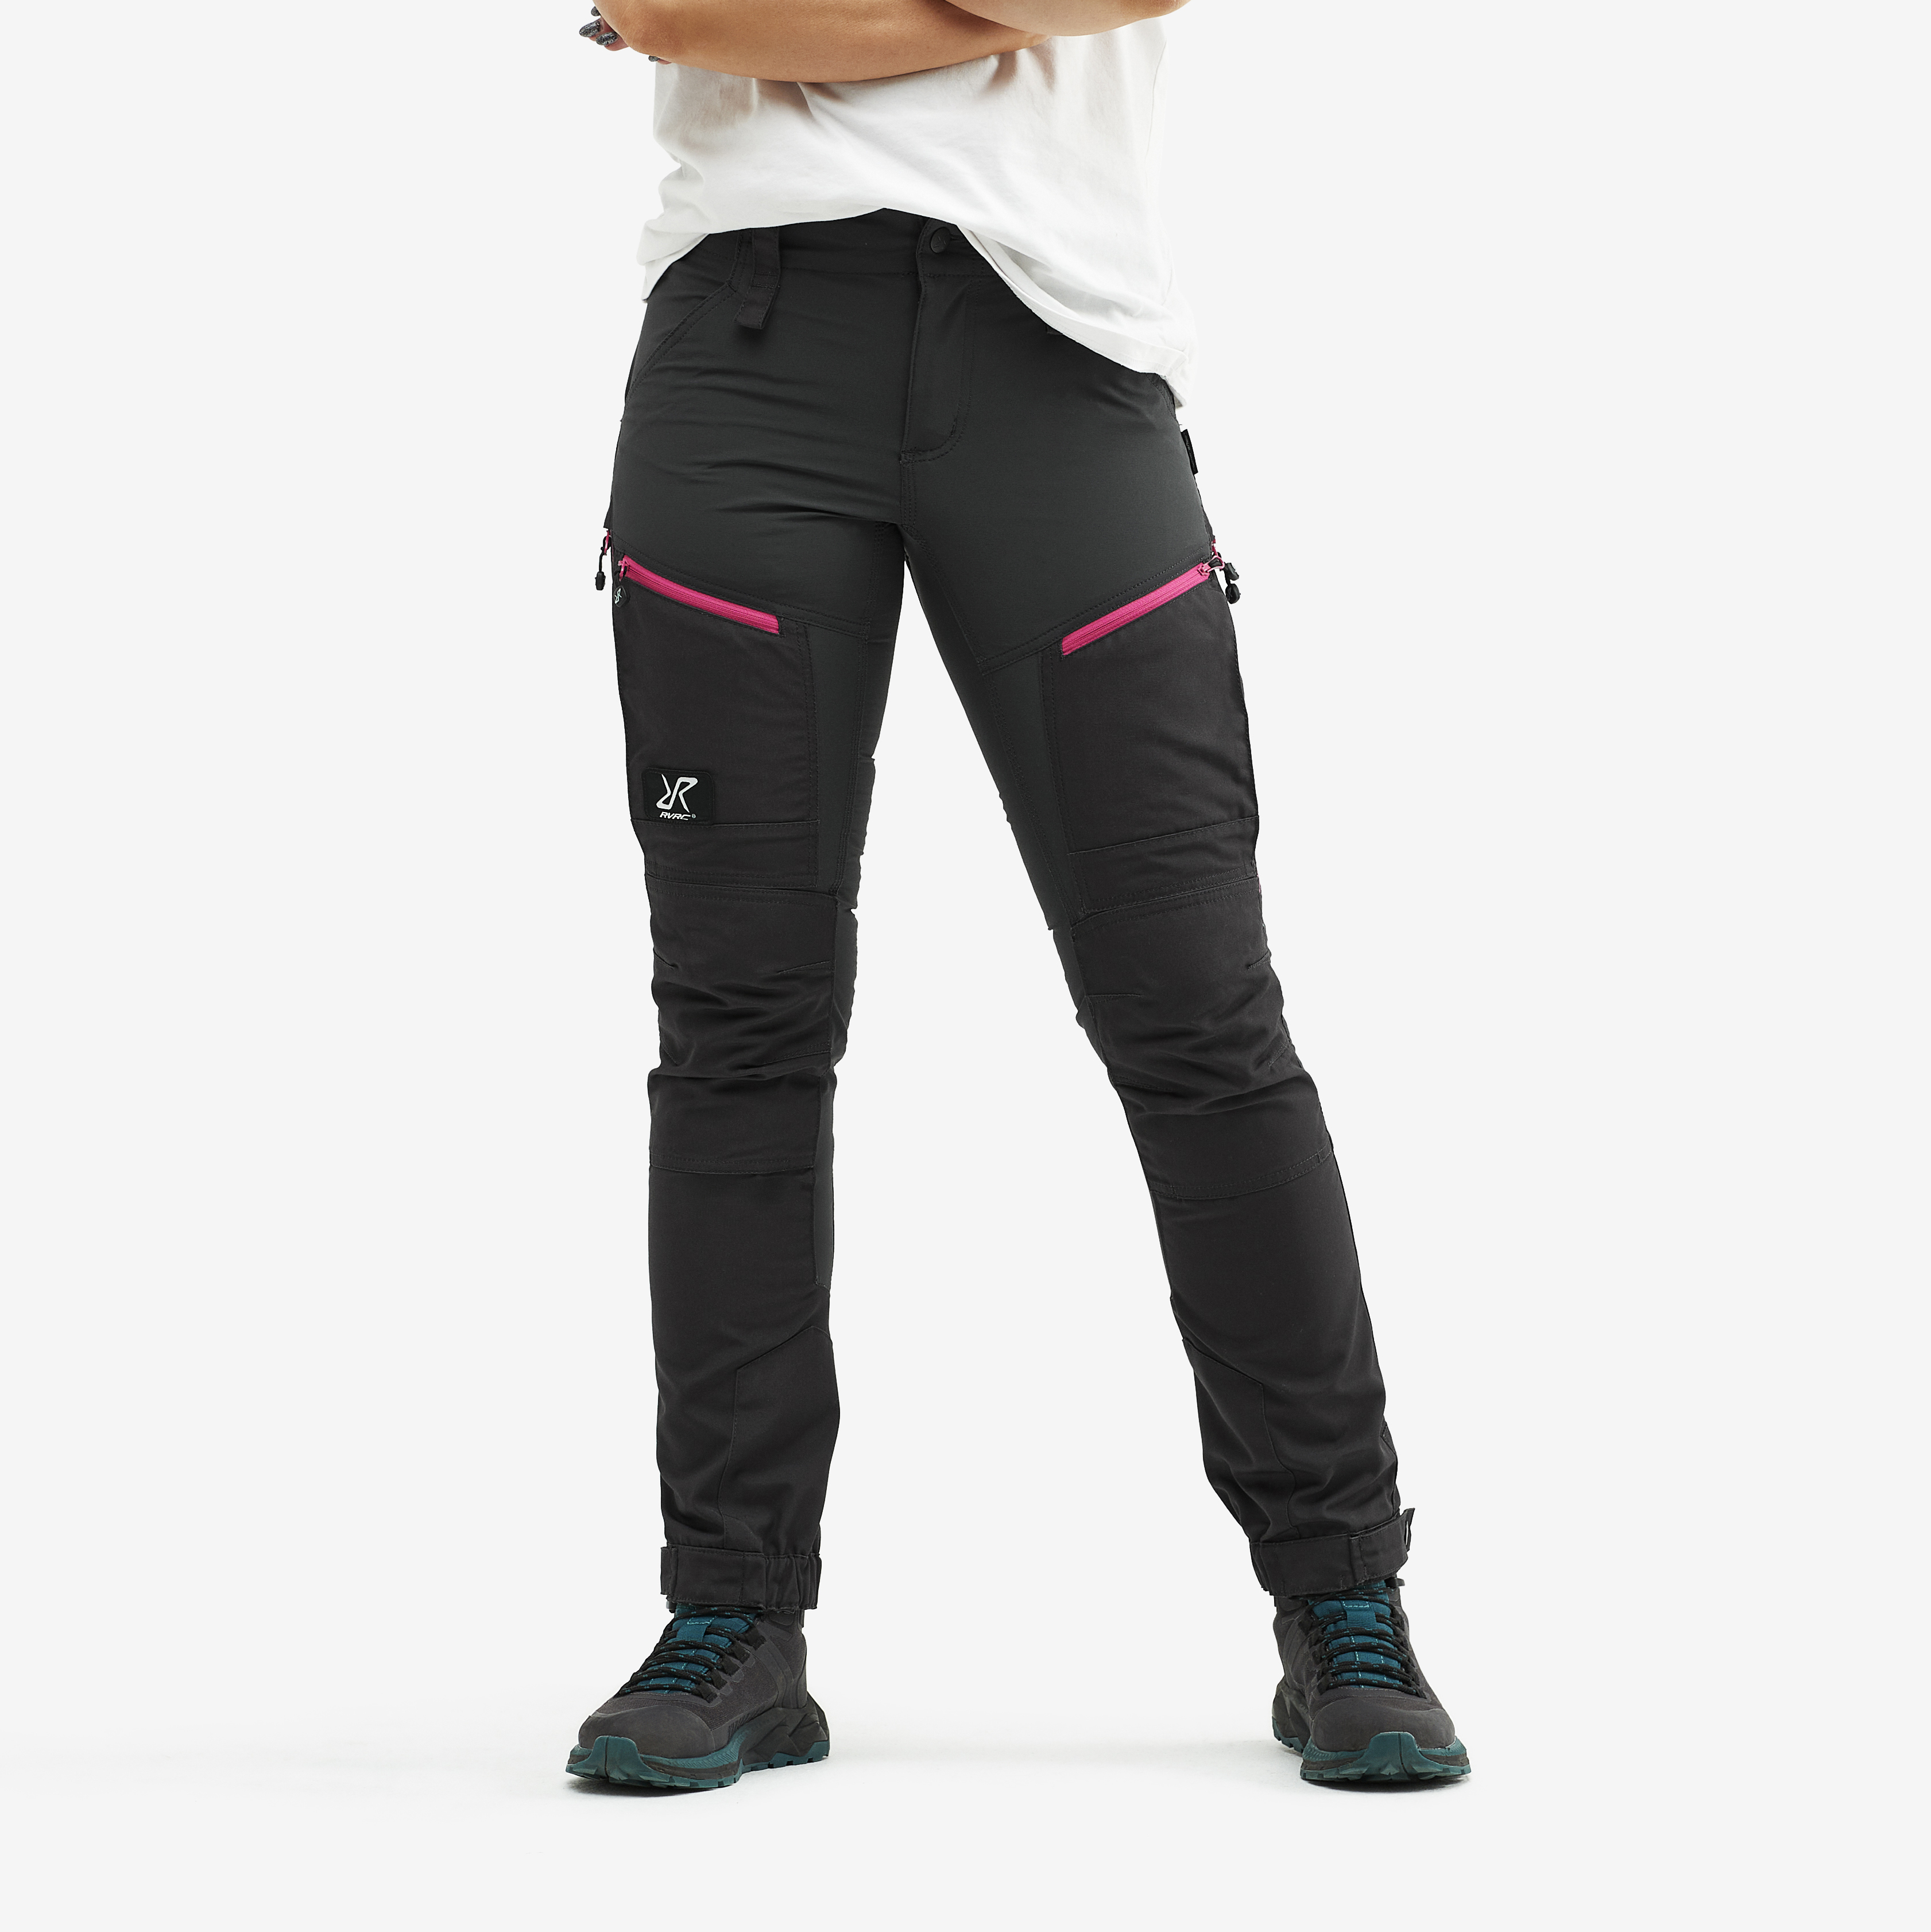 RVRC GP Pro Short Pants Grey/Pink